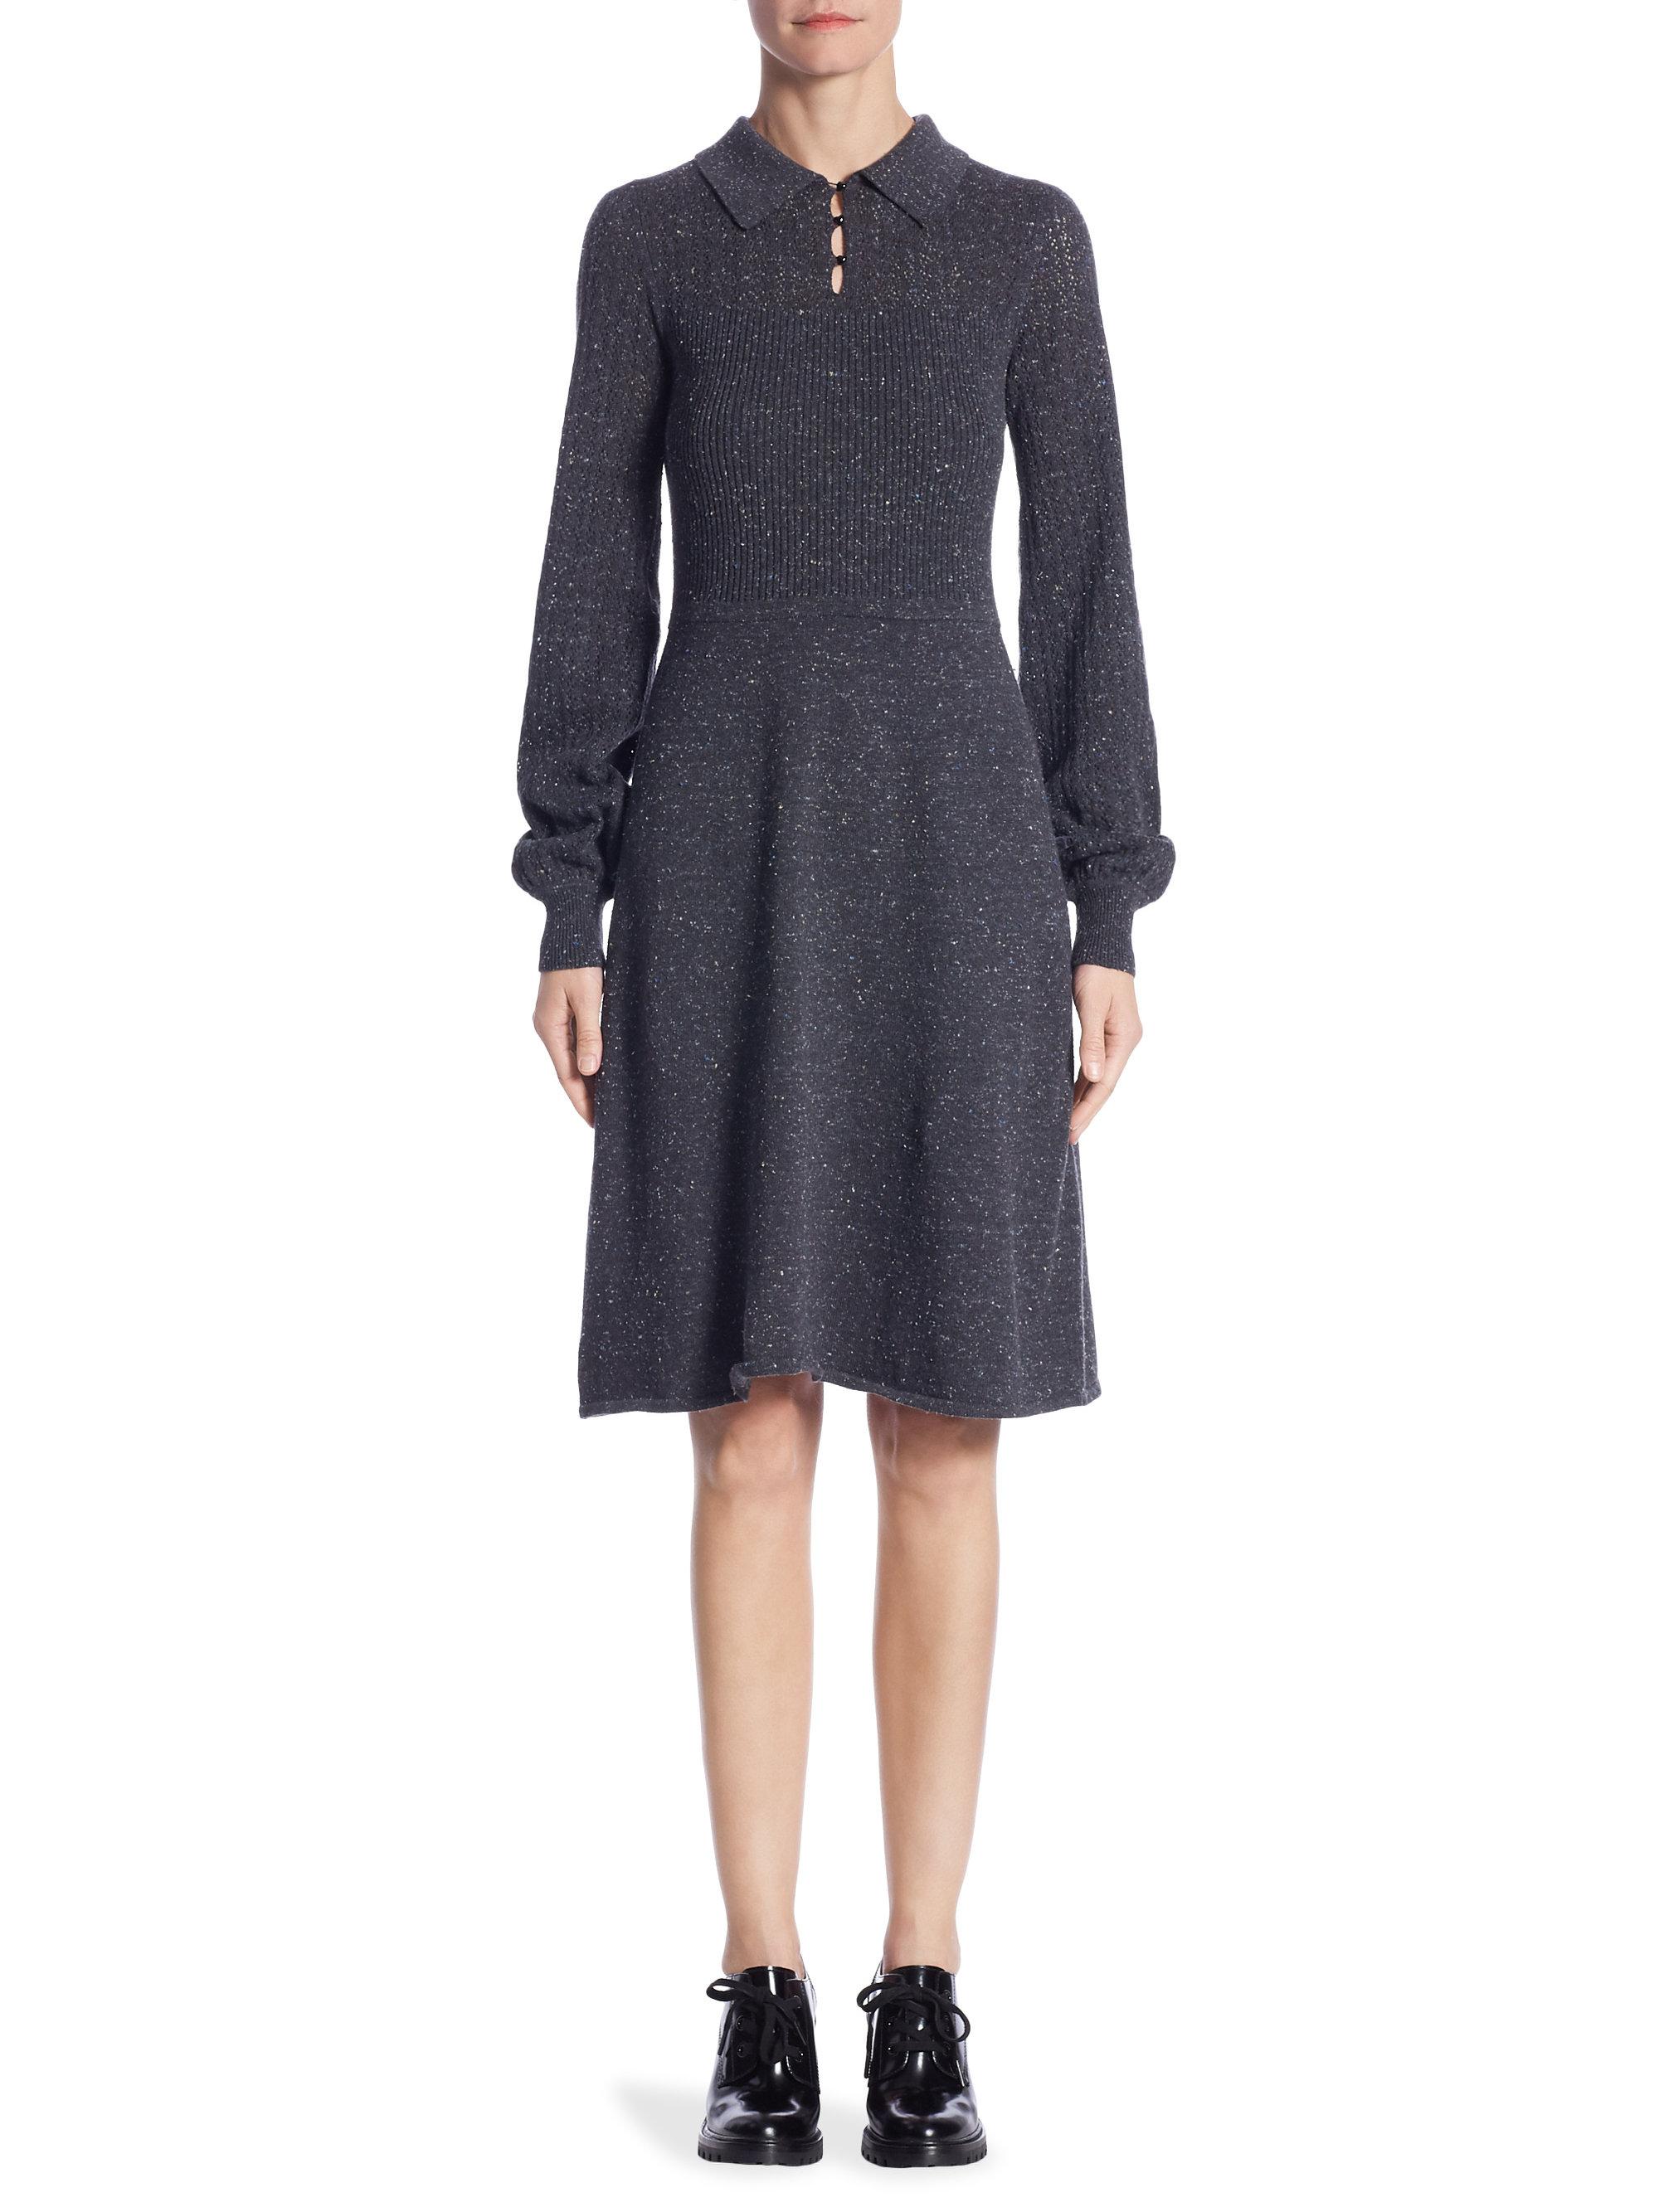 Lyst - Marc Jacobs Wool Sweater Dress in Gray